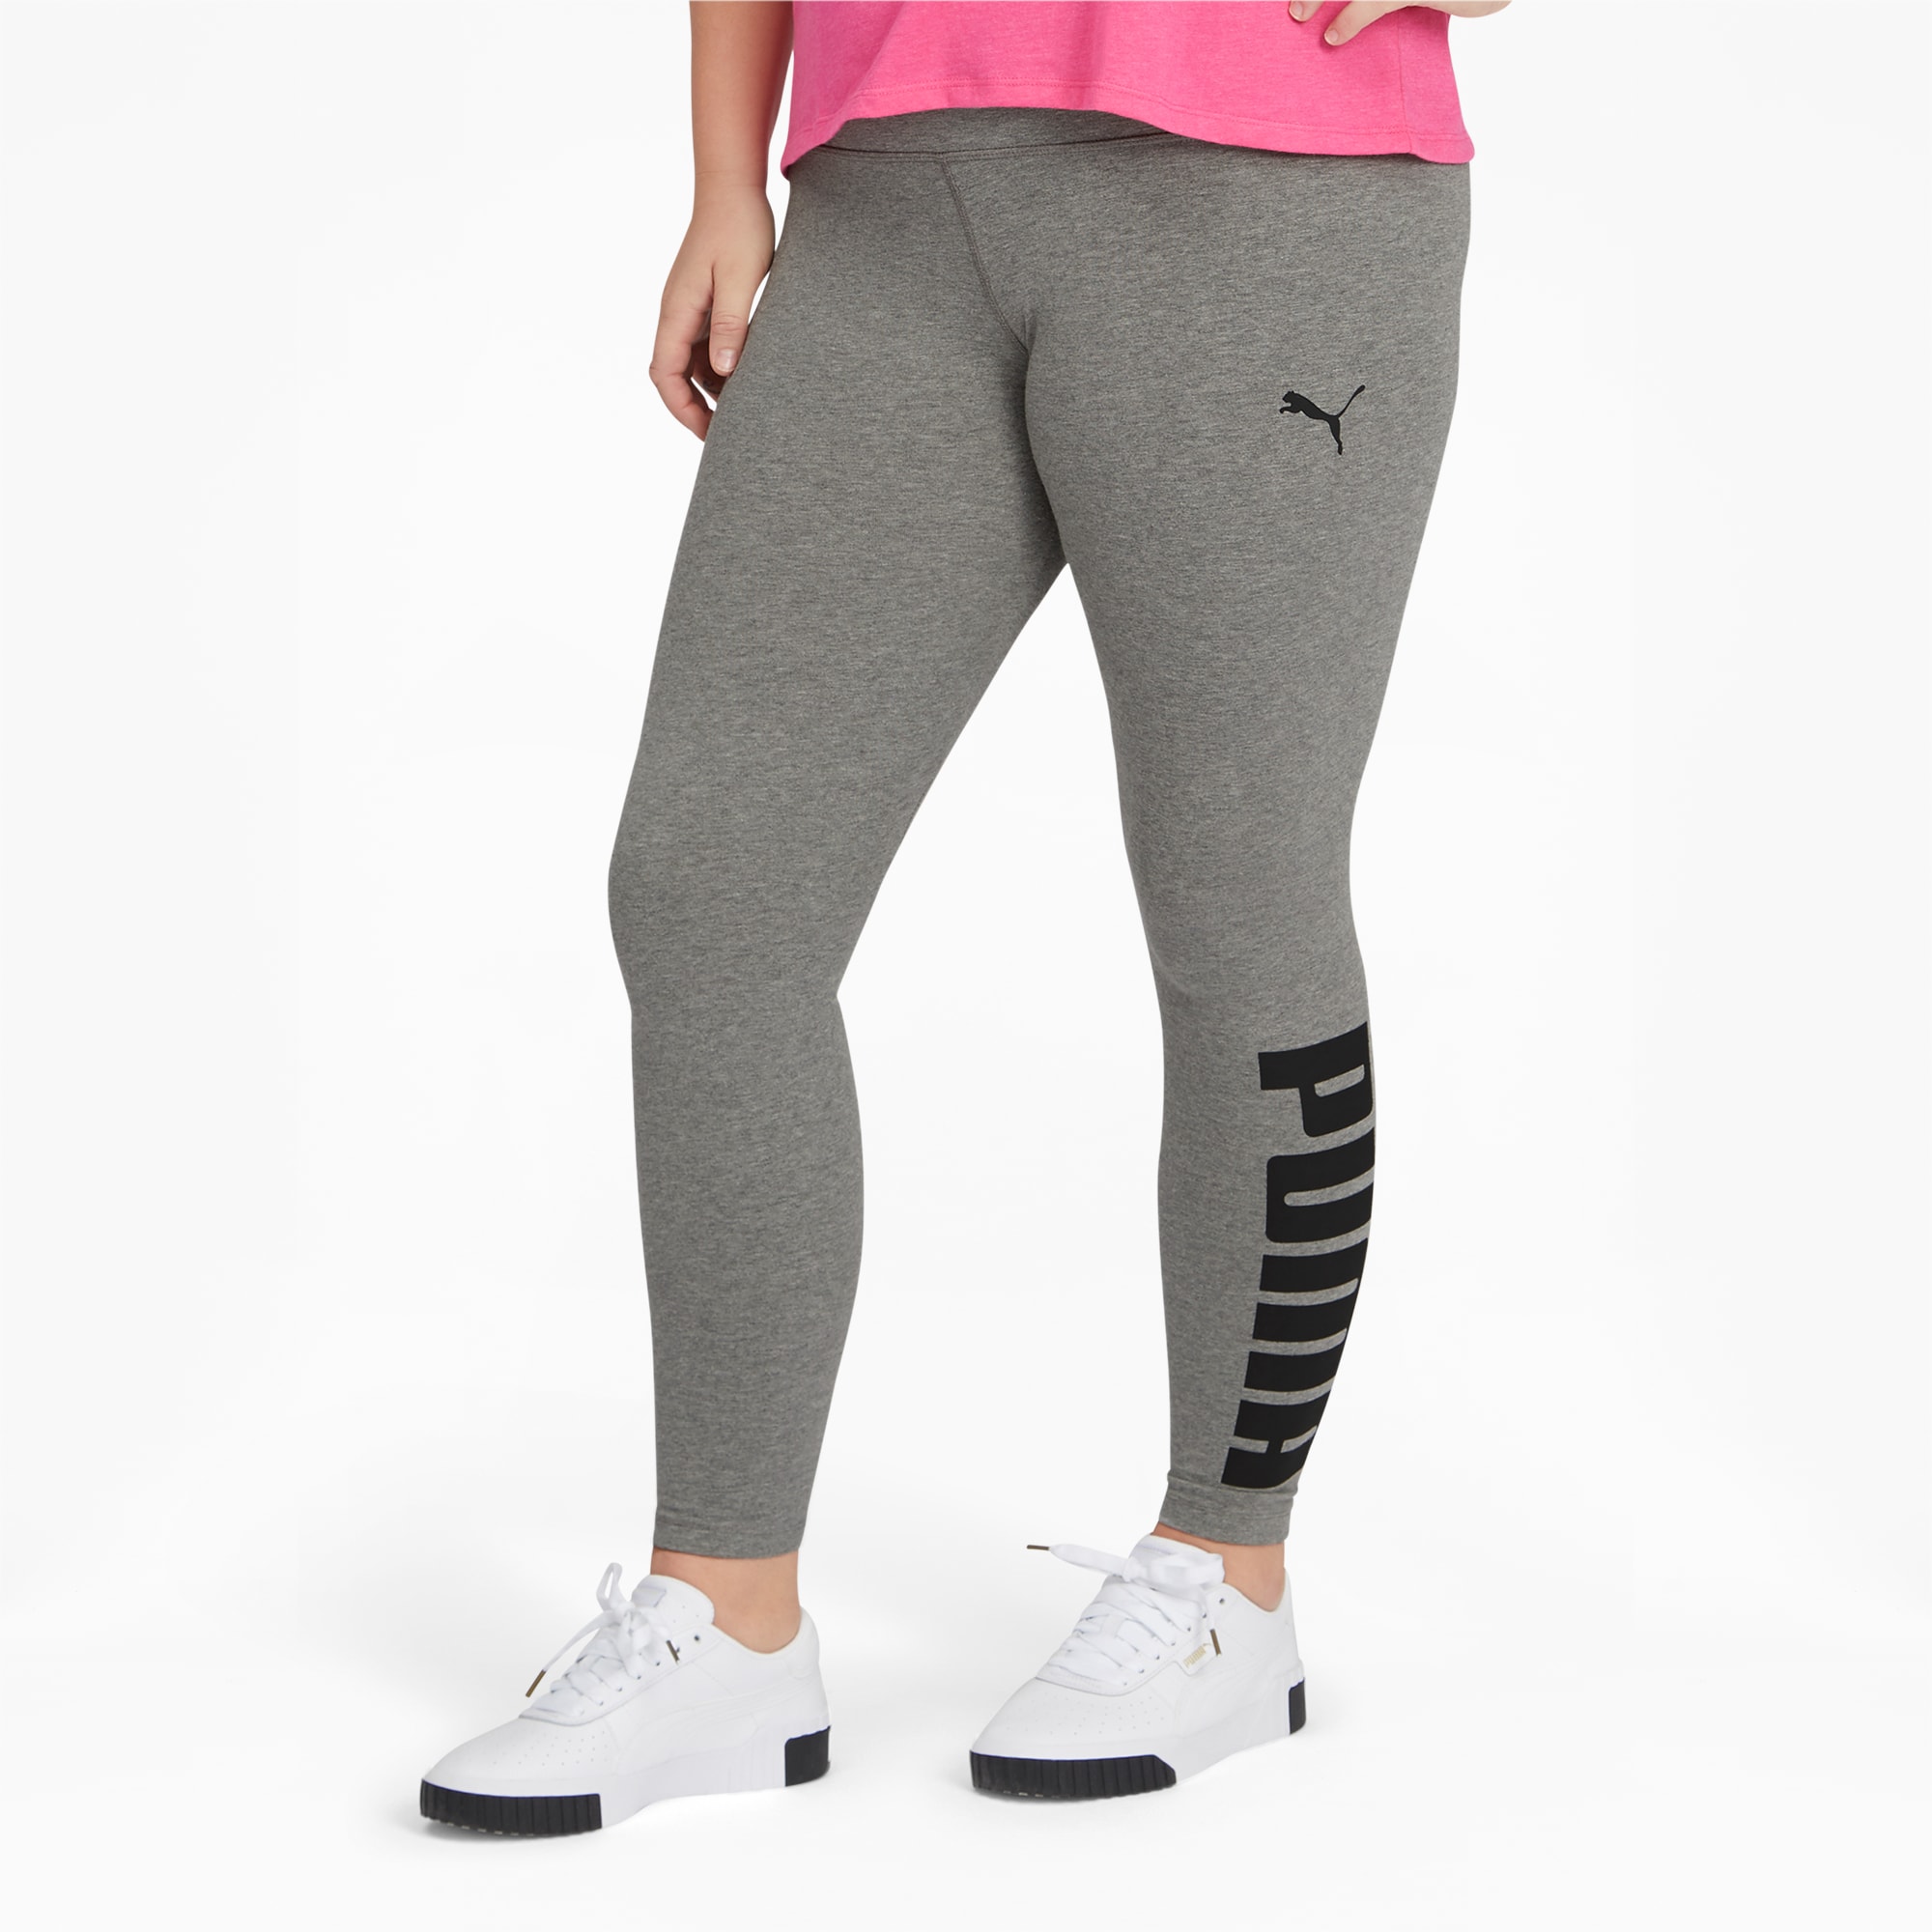 PUMA Polyester Athletic Leggings for Women